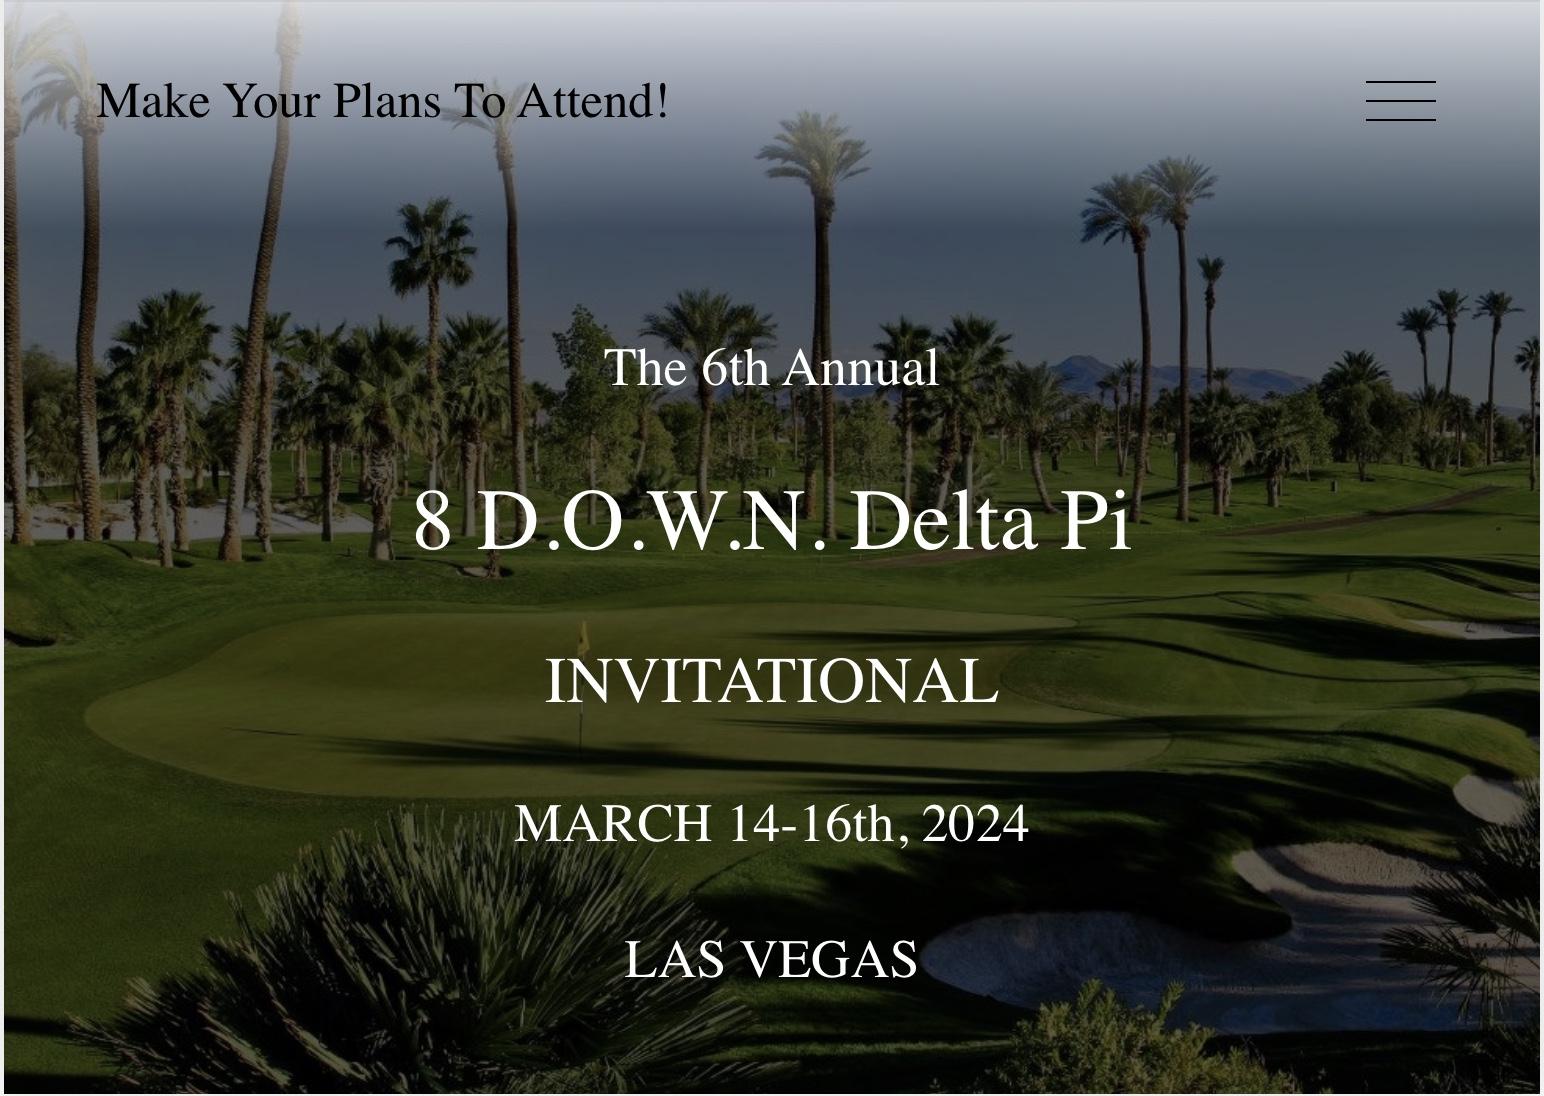 6th Annual 8 D.O.W.N. Delta Pi Invitational